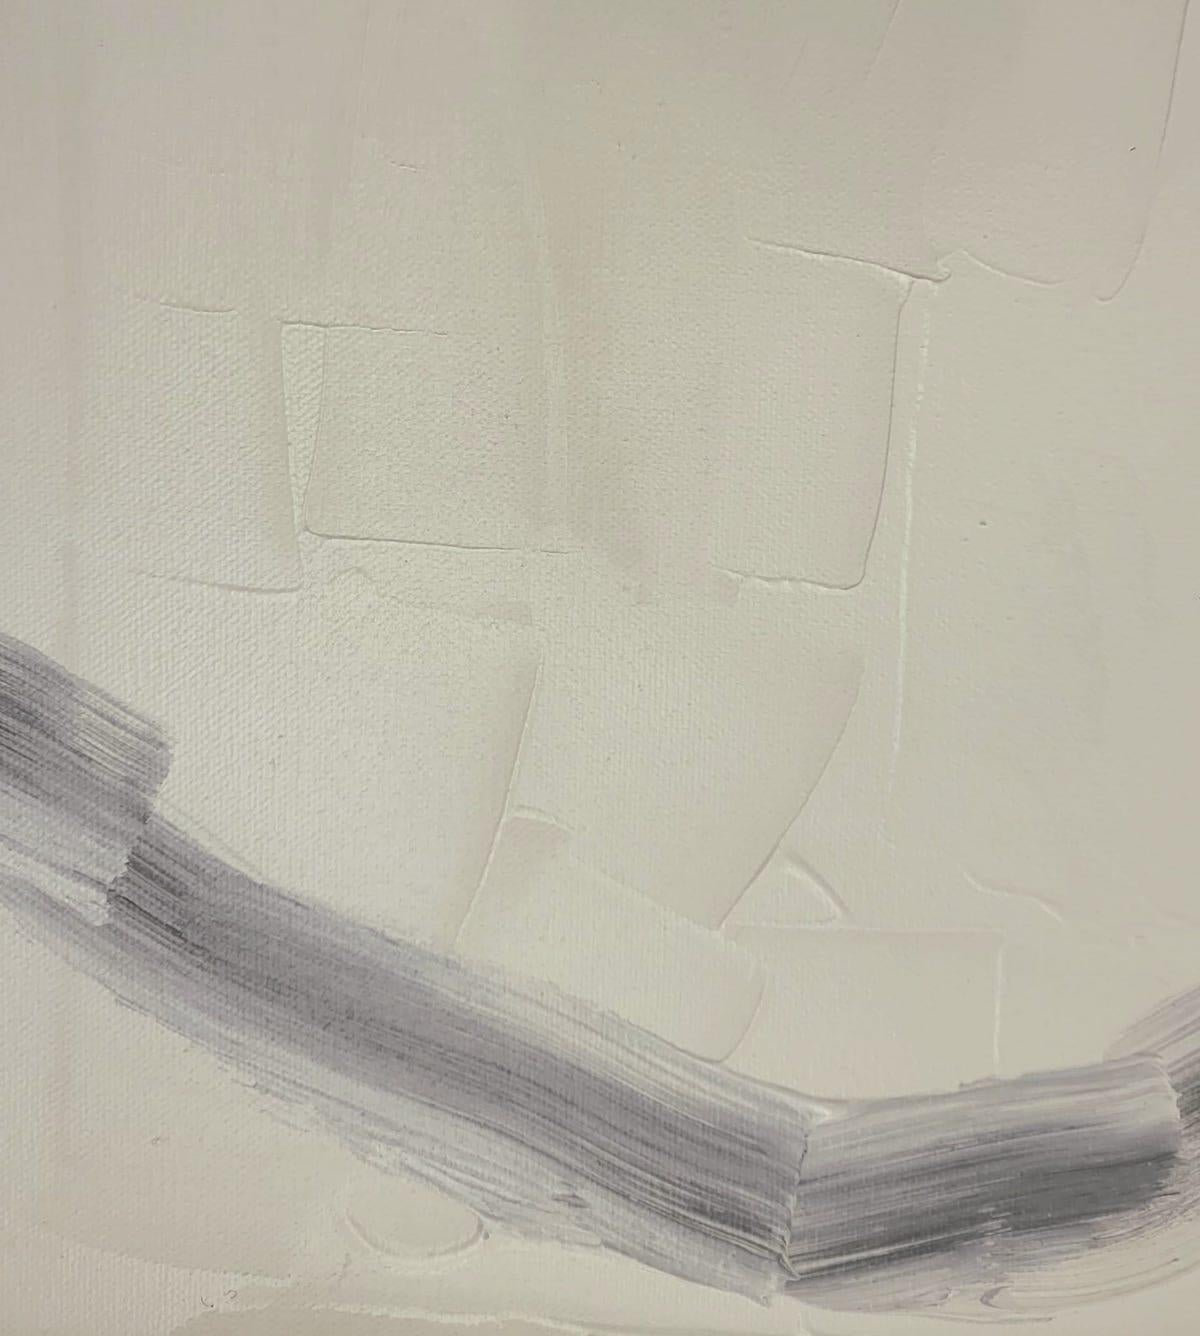 Grey Matter by Fleur Park [2022]
original

Acrylic on canvas

Image size: H:60.5 cm x W:60.7 cm

Complete Size of Unframed Work: H:60.5 cm x W:60.7 cm x D:1.5cm

Frame Size: H:64 cm x W:64 cm x D:4cm

Sold Framed

Please note that insitu images are